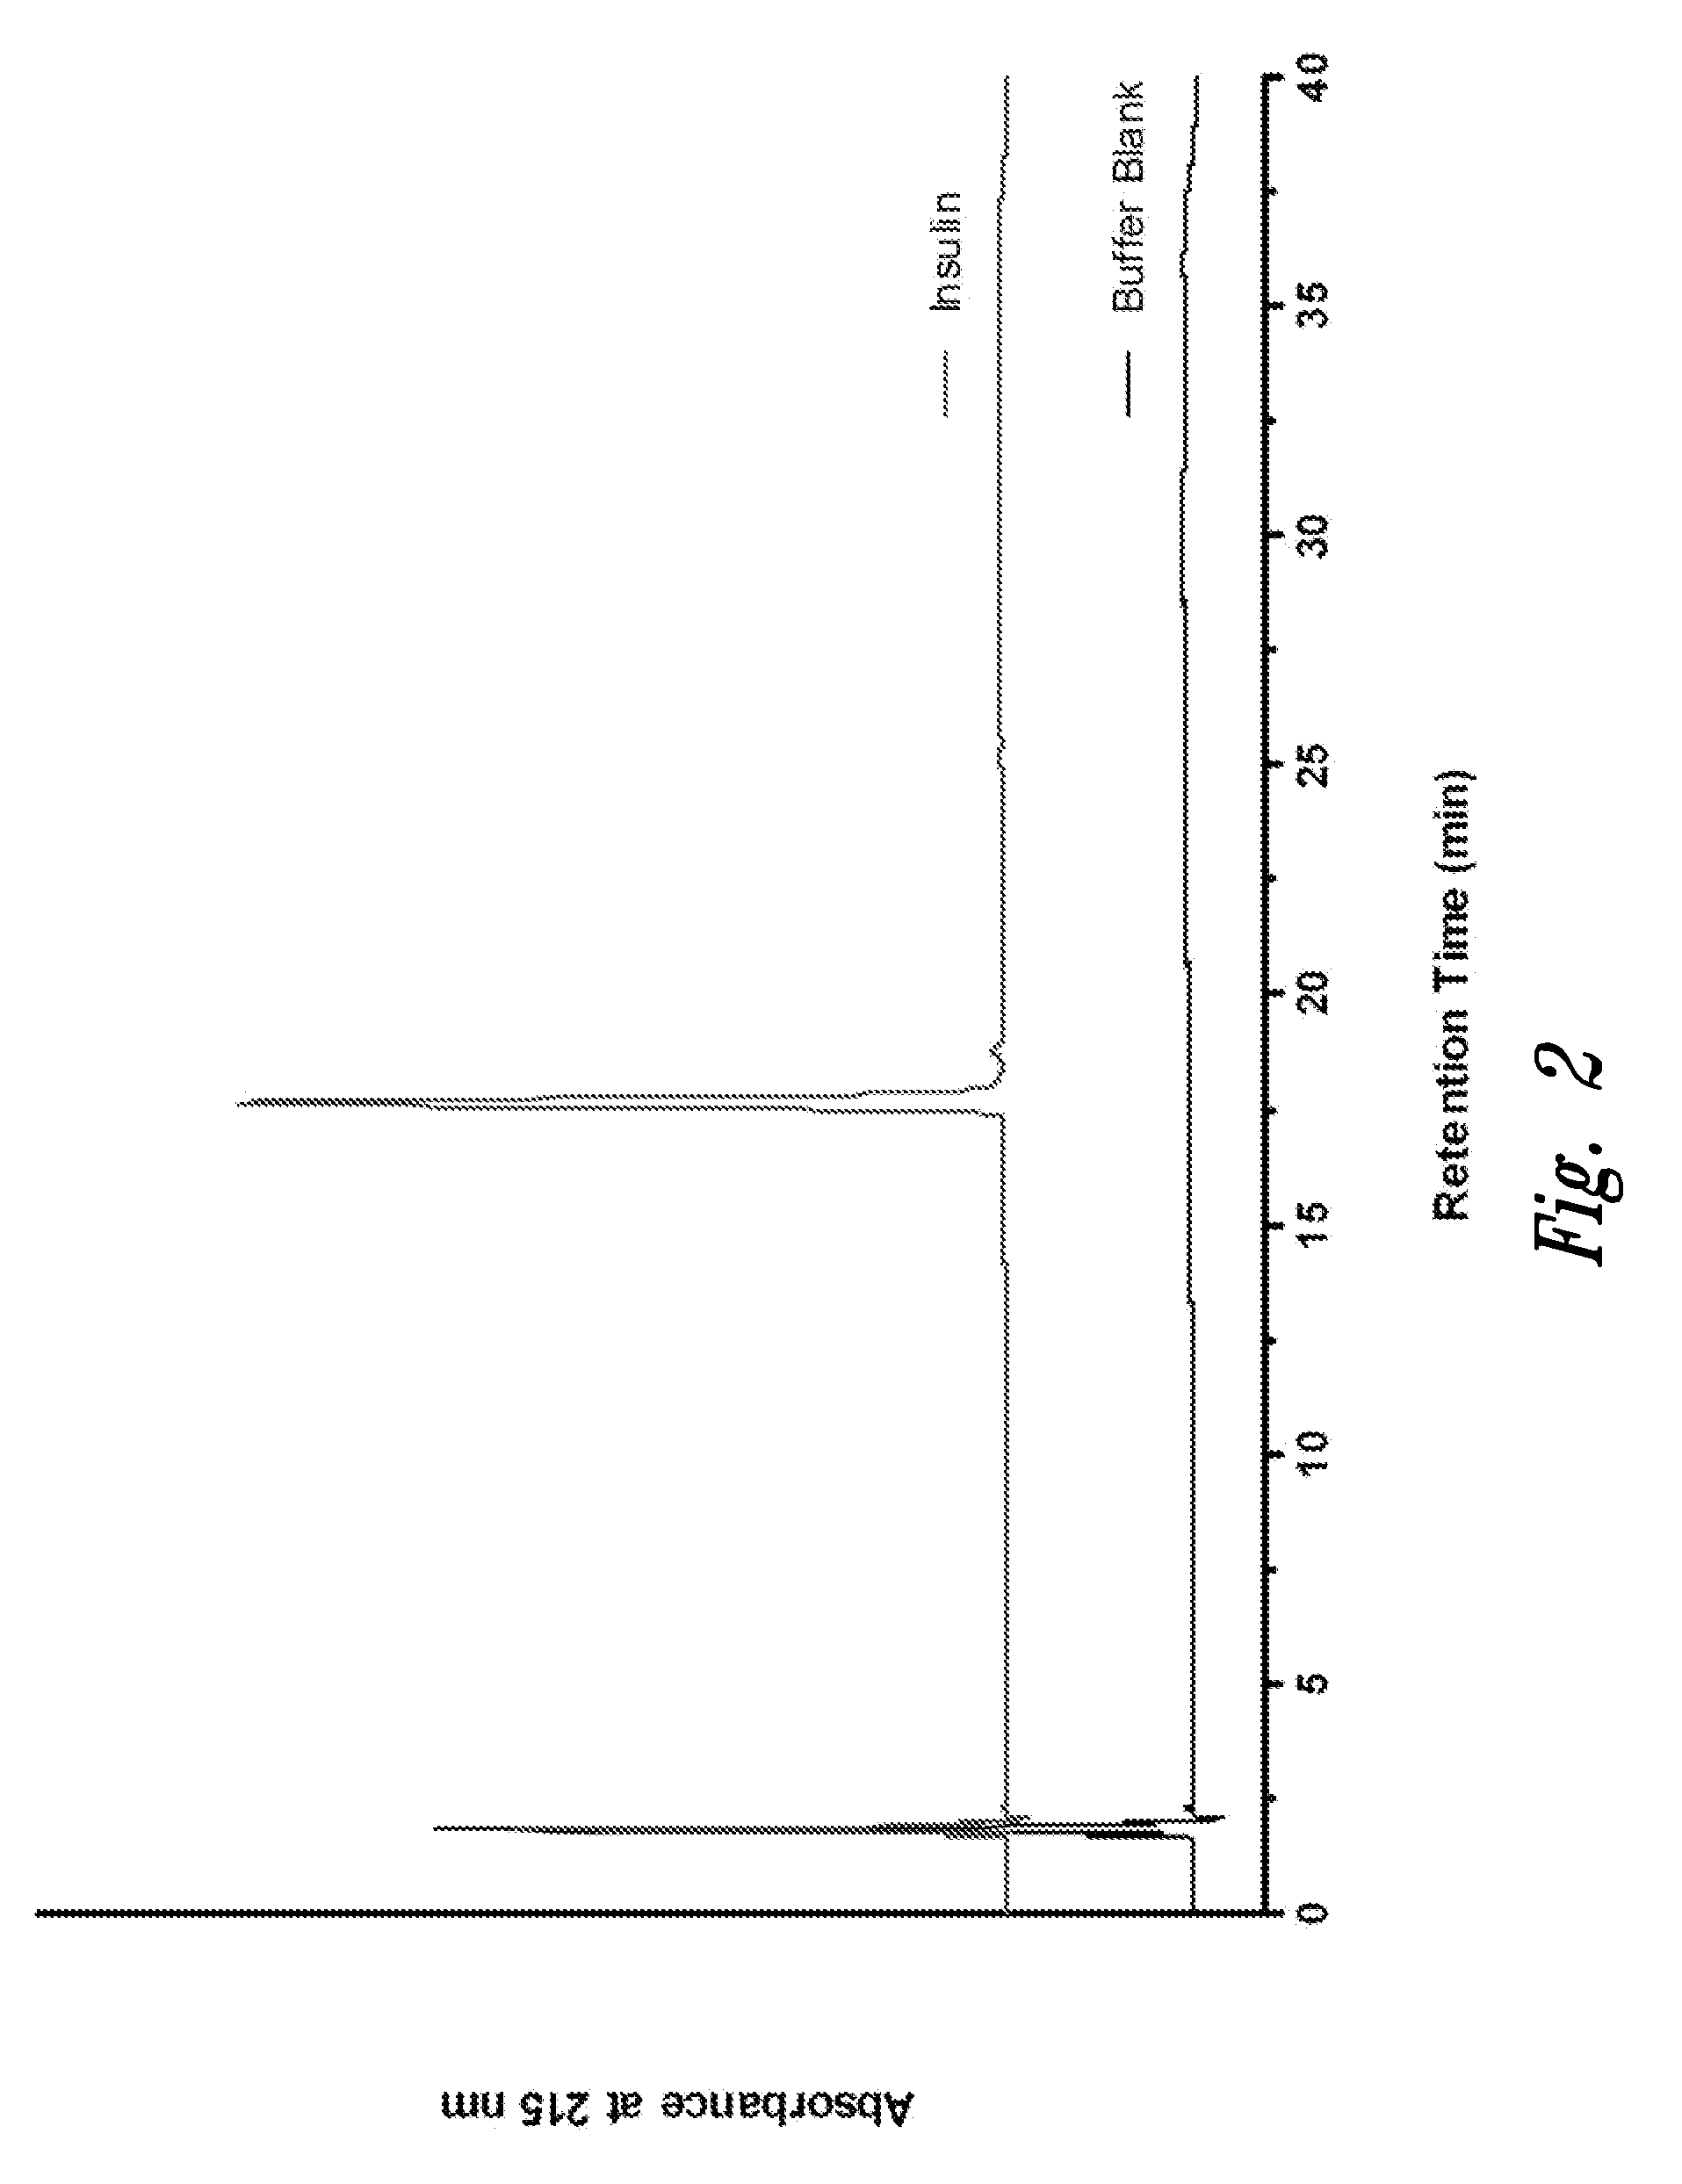 Polypeptide disulfide bond analysis